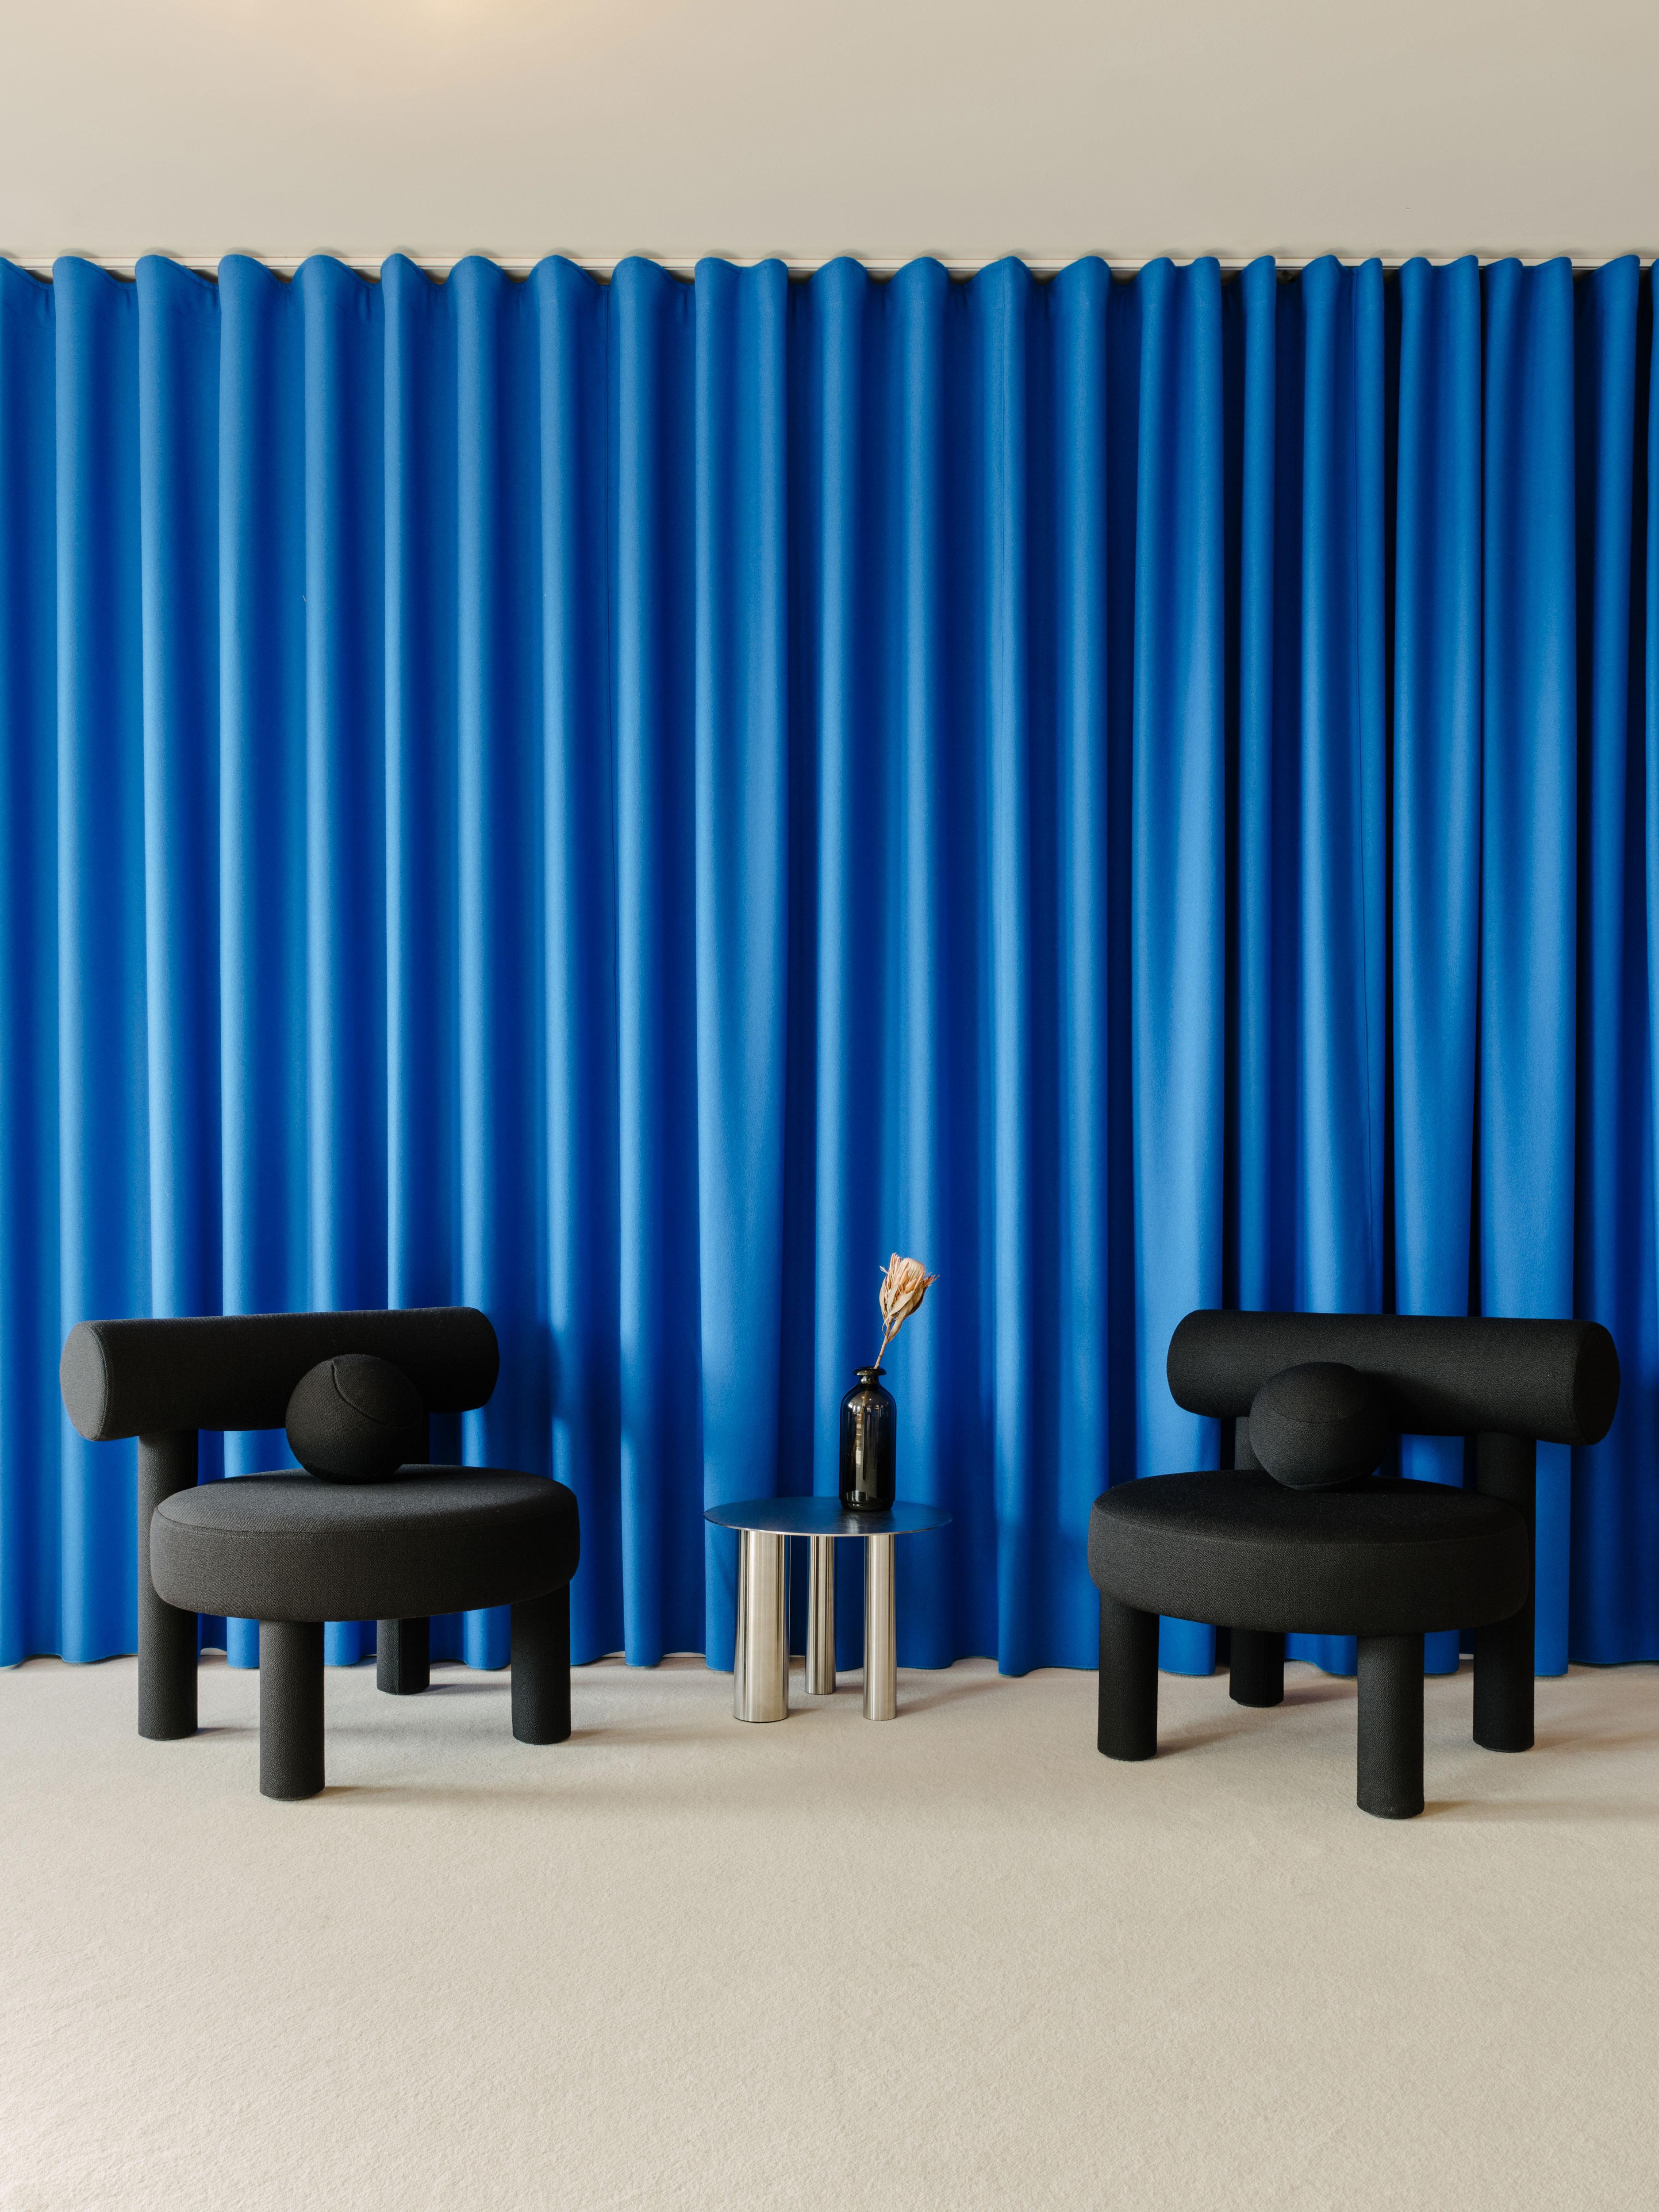 Modern Low Chair Gropius CS1 in Fire Retardant Cobalt Blue Wool fabric by NOOM For Sale 3